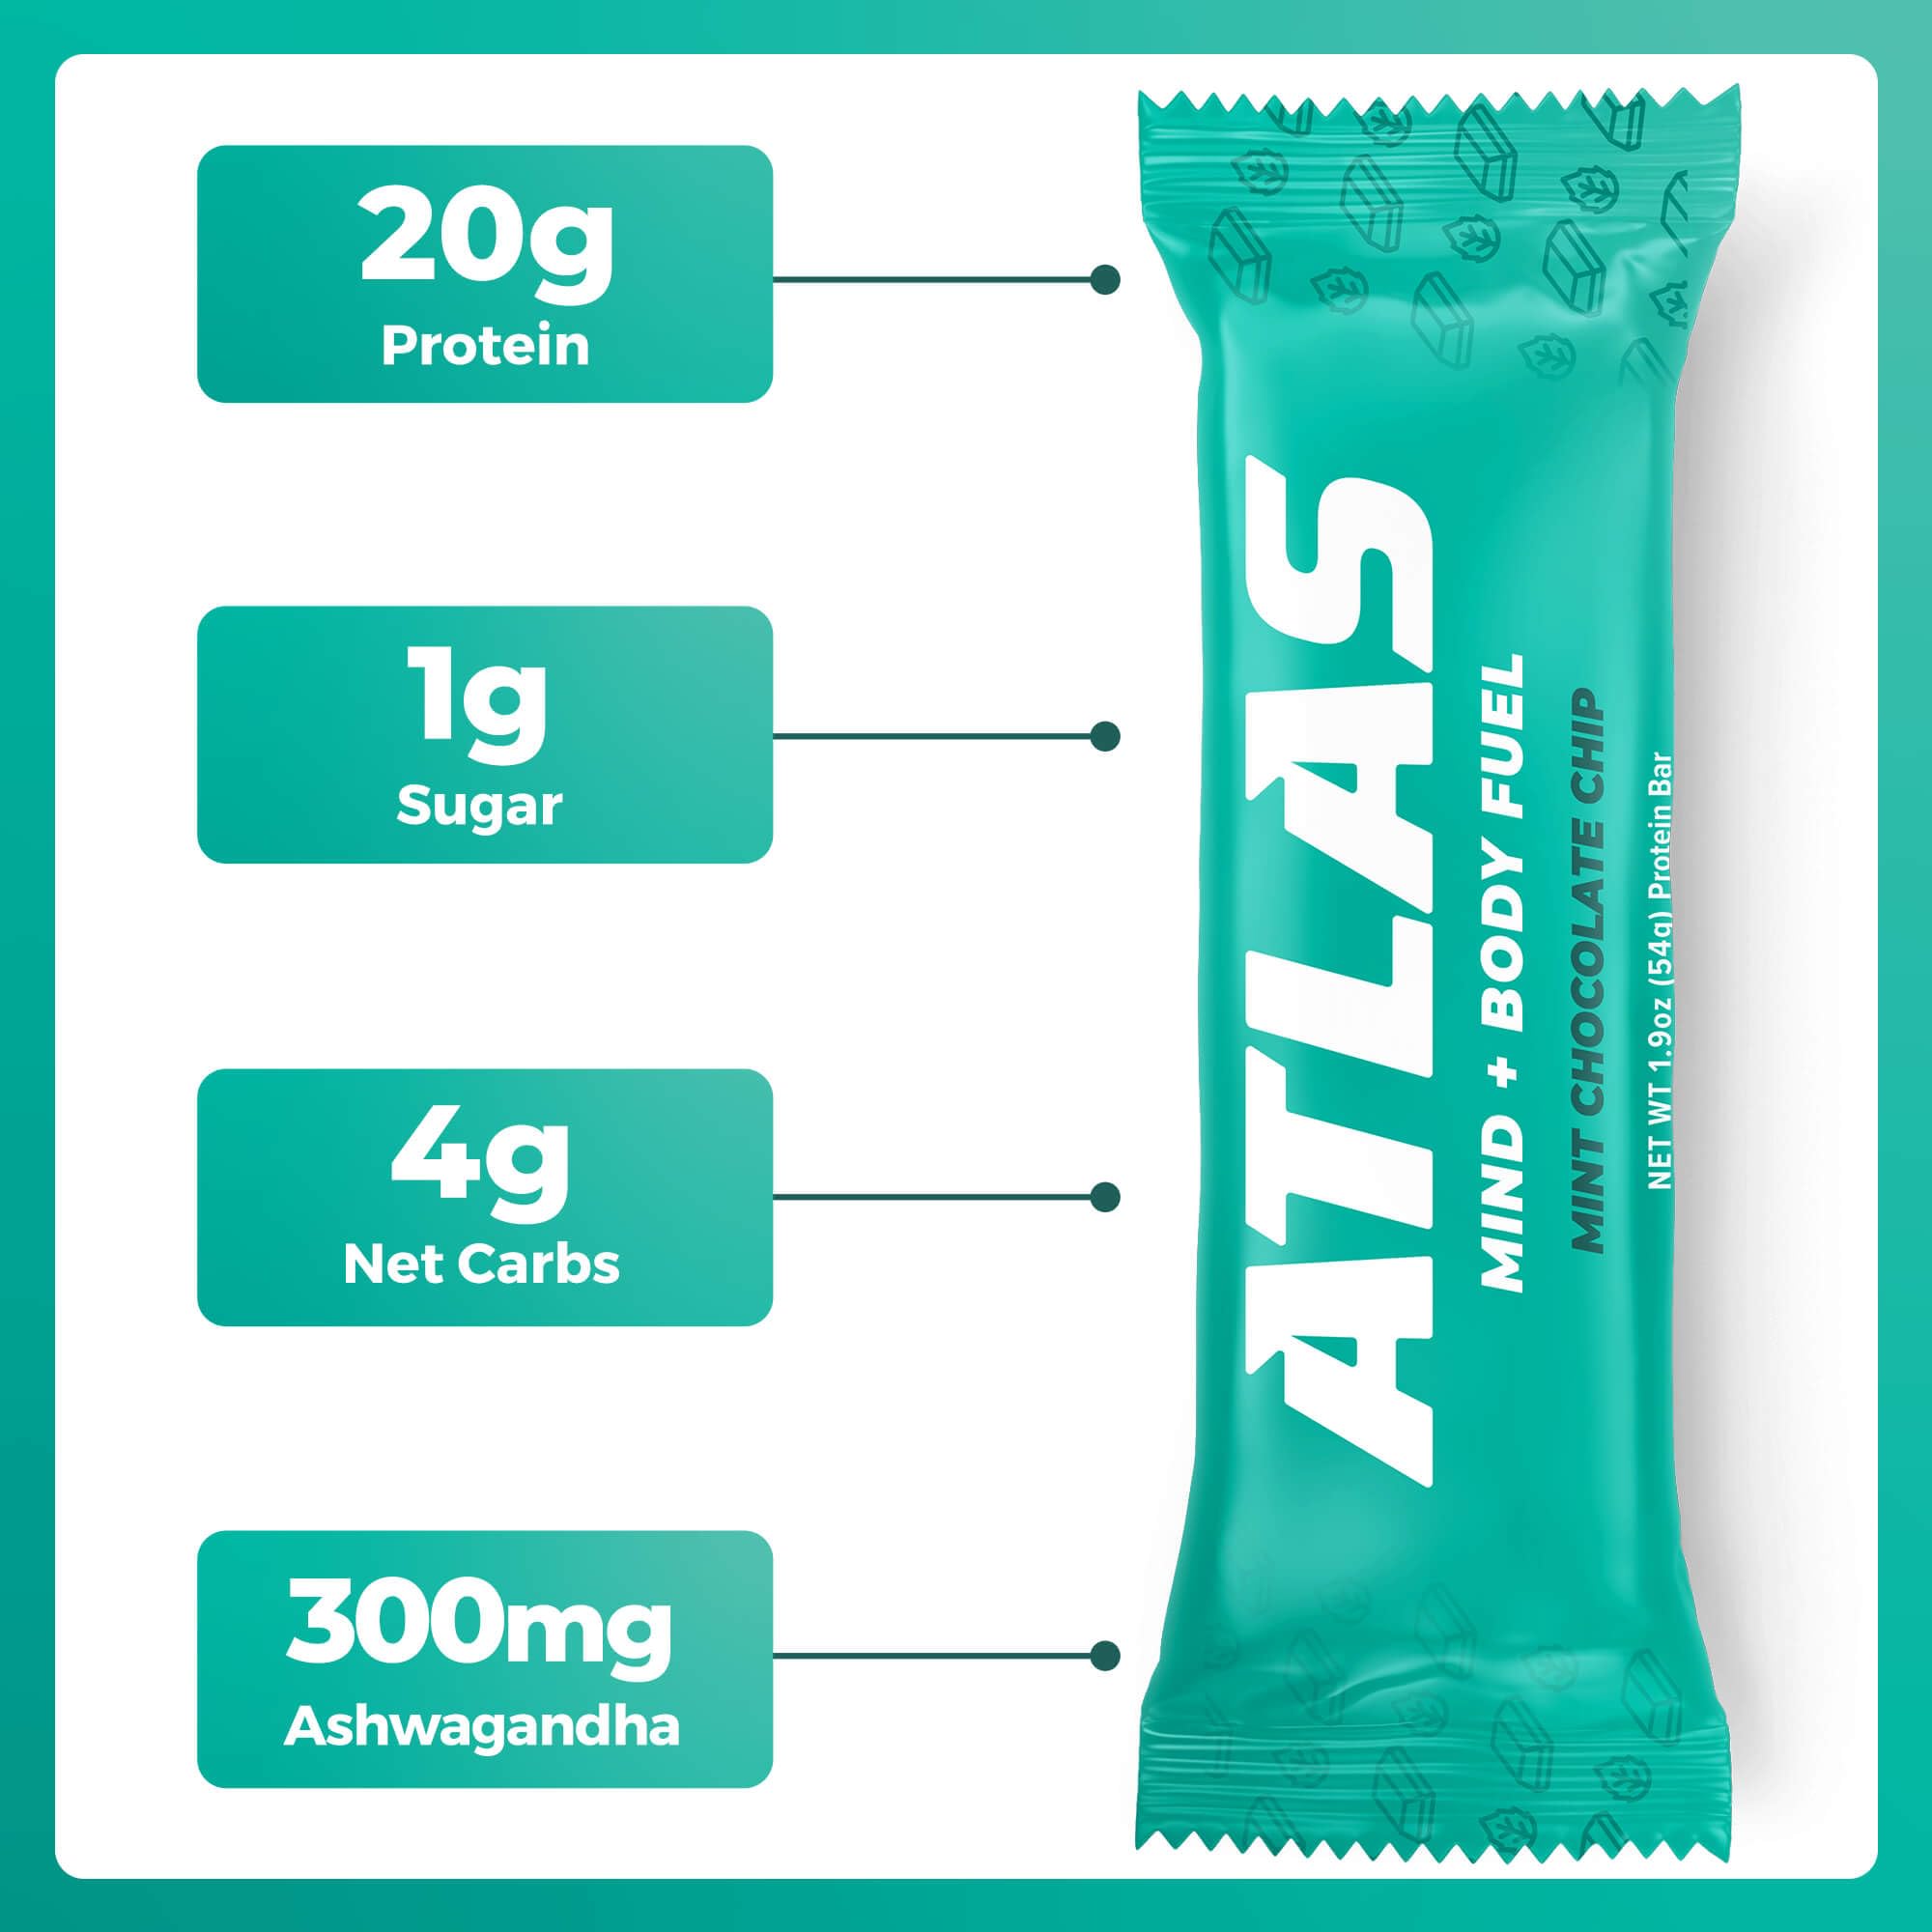 Atlas Protein Bar, 20g Protein, 1g Sugar, Clean Ingredients, Gluten Free (Mint Chocolate Chip, 12 Count (Pack of 2))